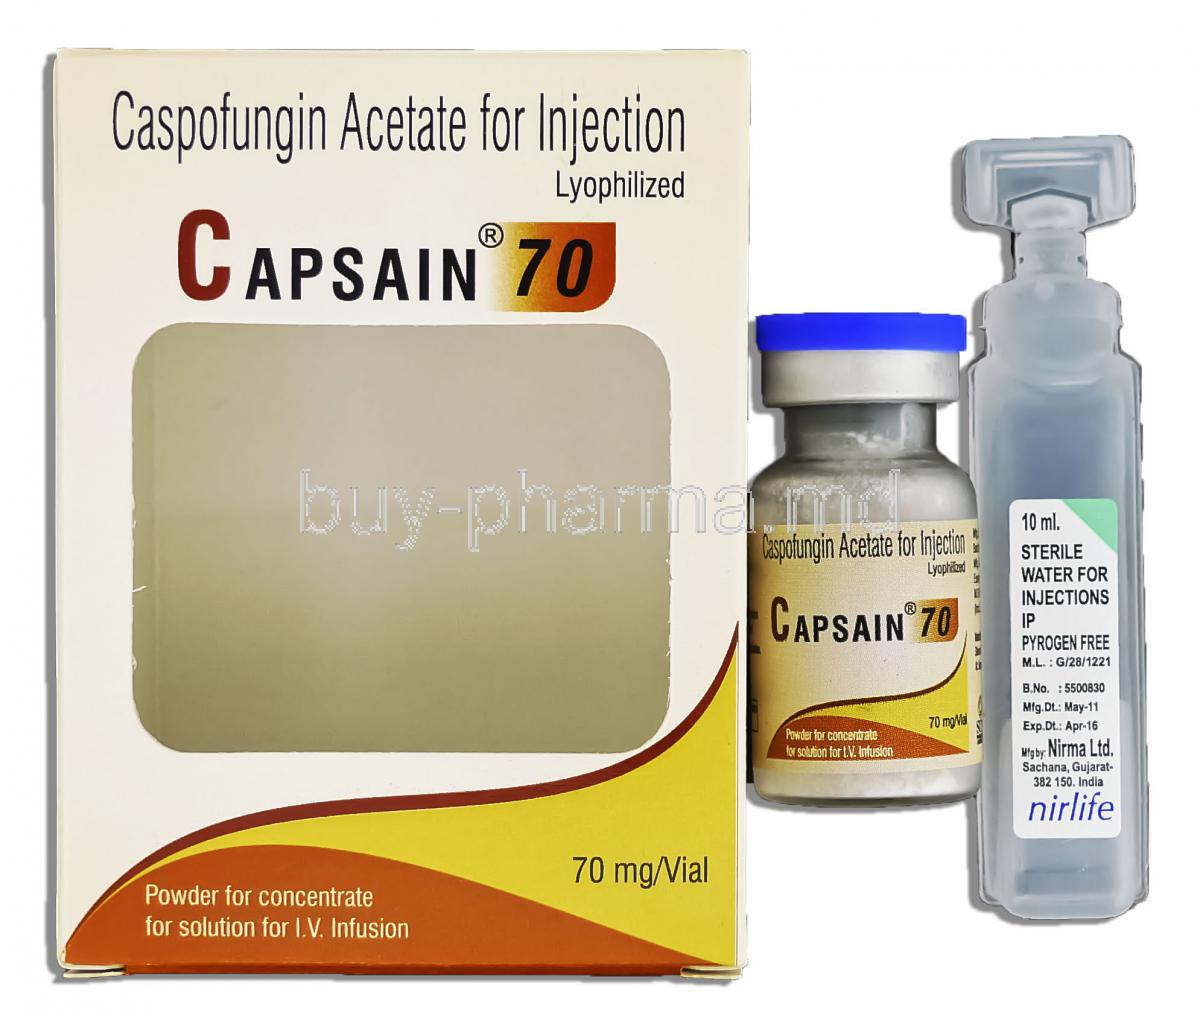 Capsain, Generic Cancidas, Caspofungin Acetate 70 mg Injection